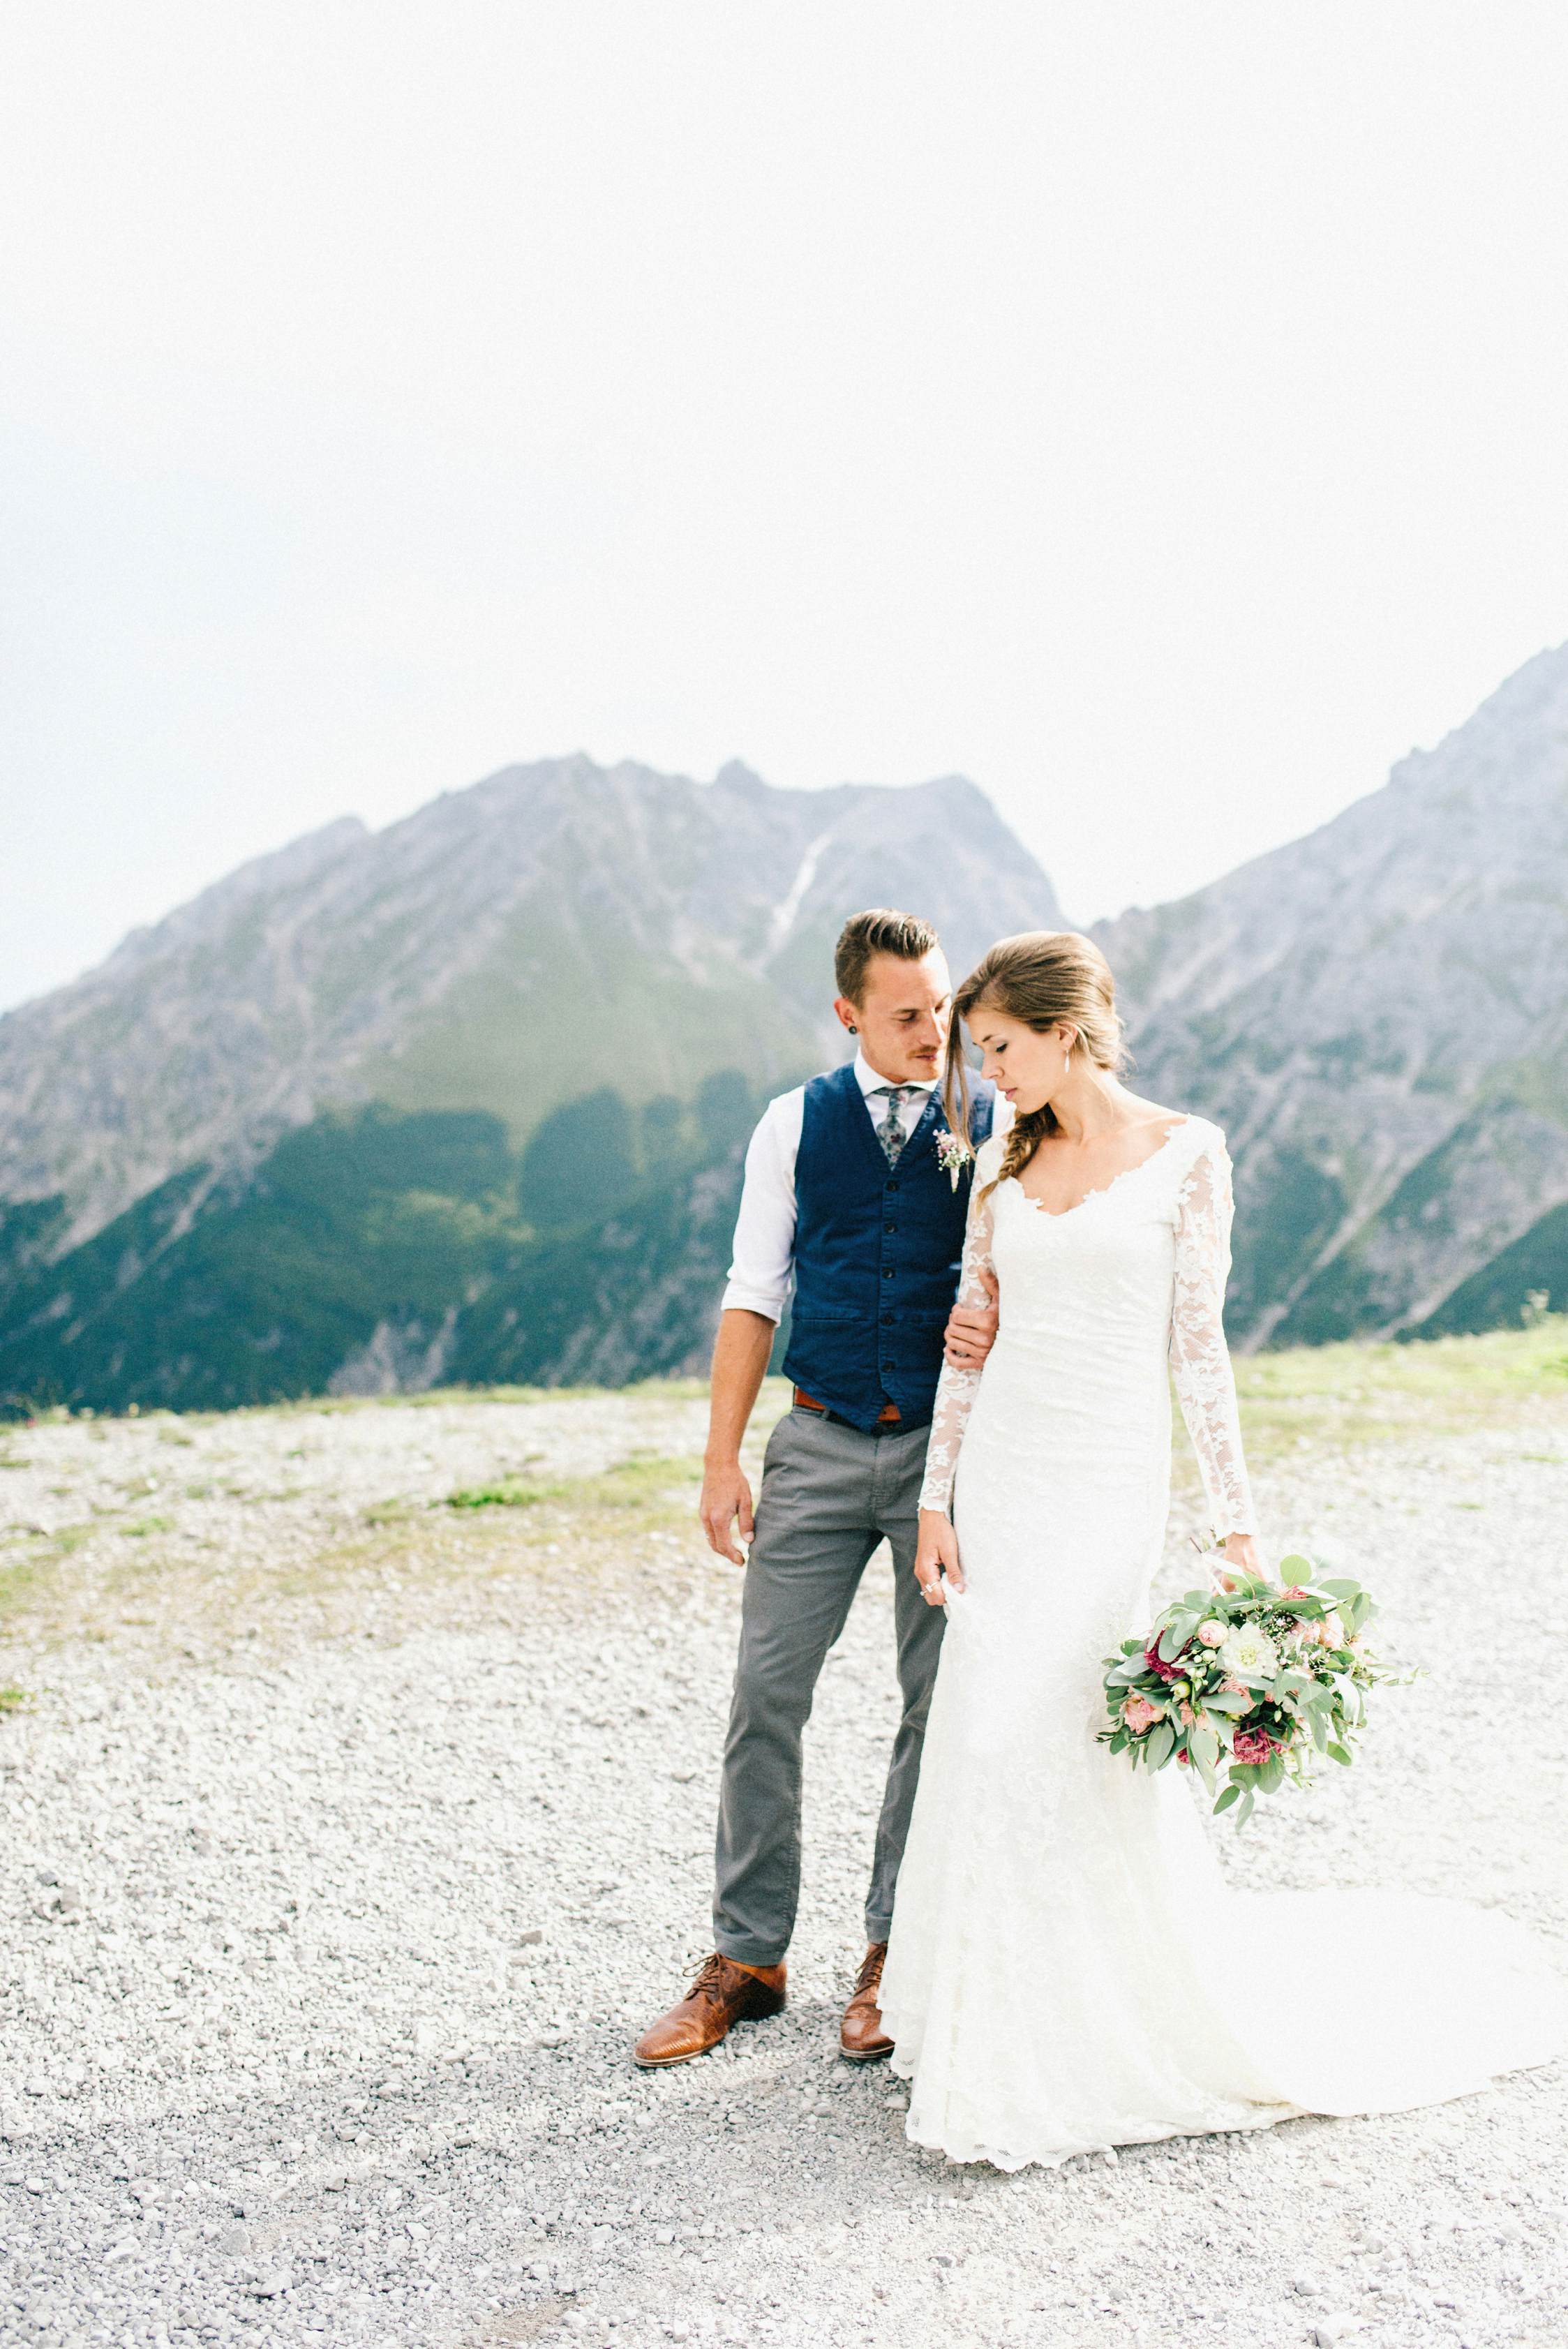 Fine art wedding photographer Lindau Germany - Wedding in mountains